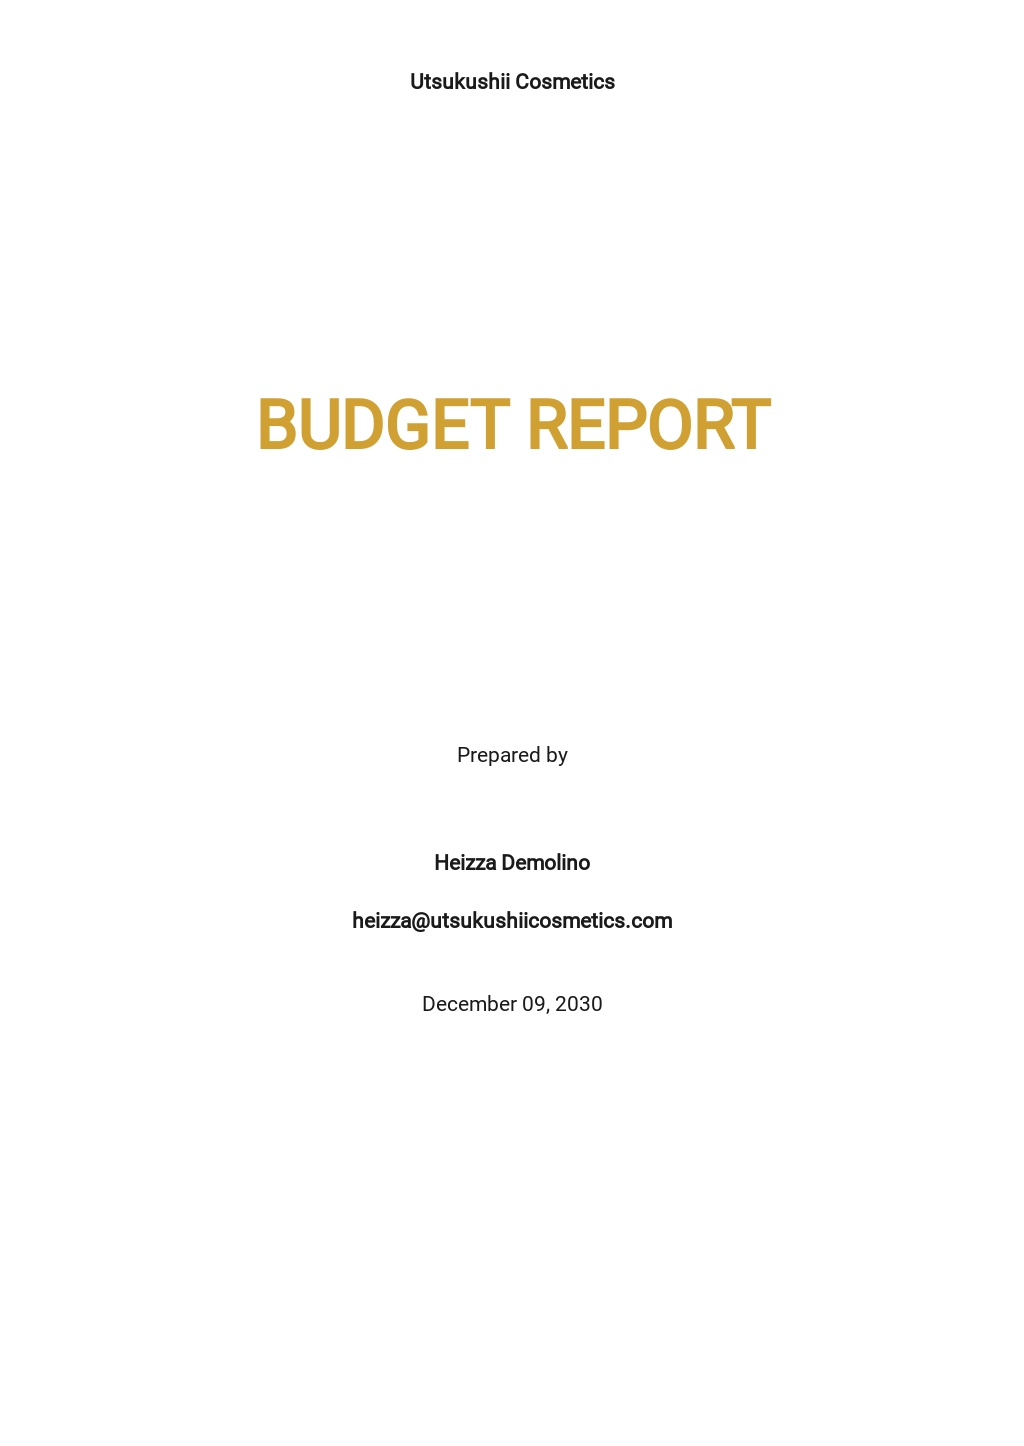 Sample Budget Report Template.jpe